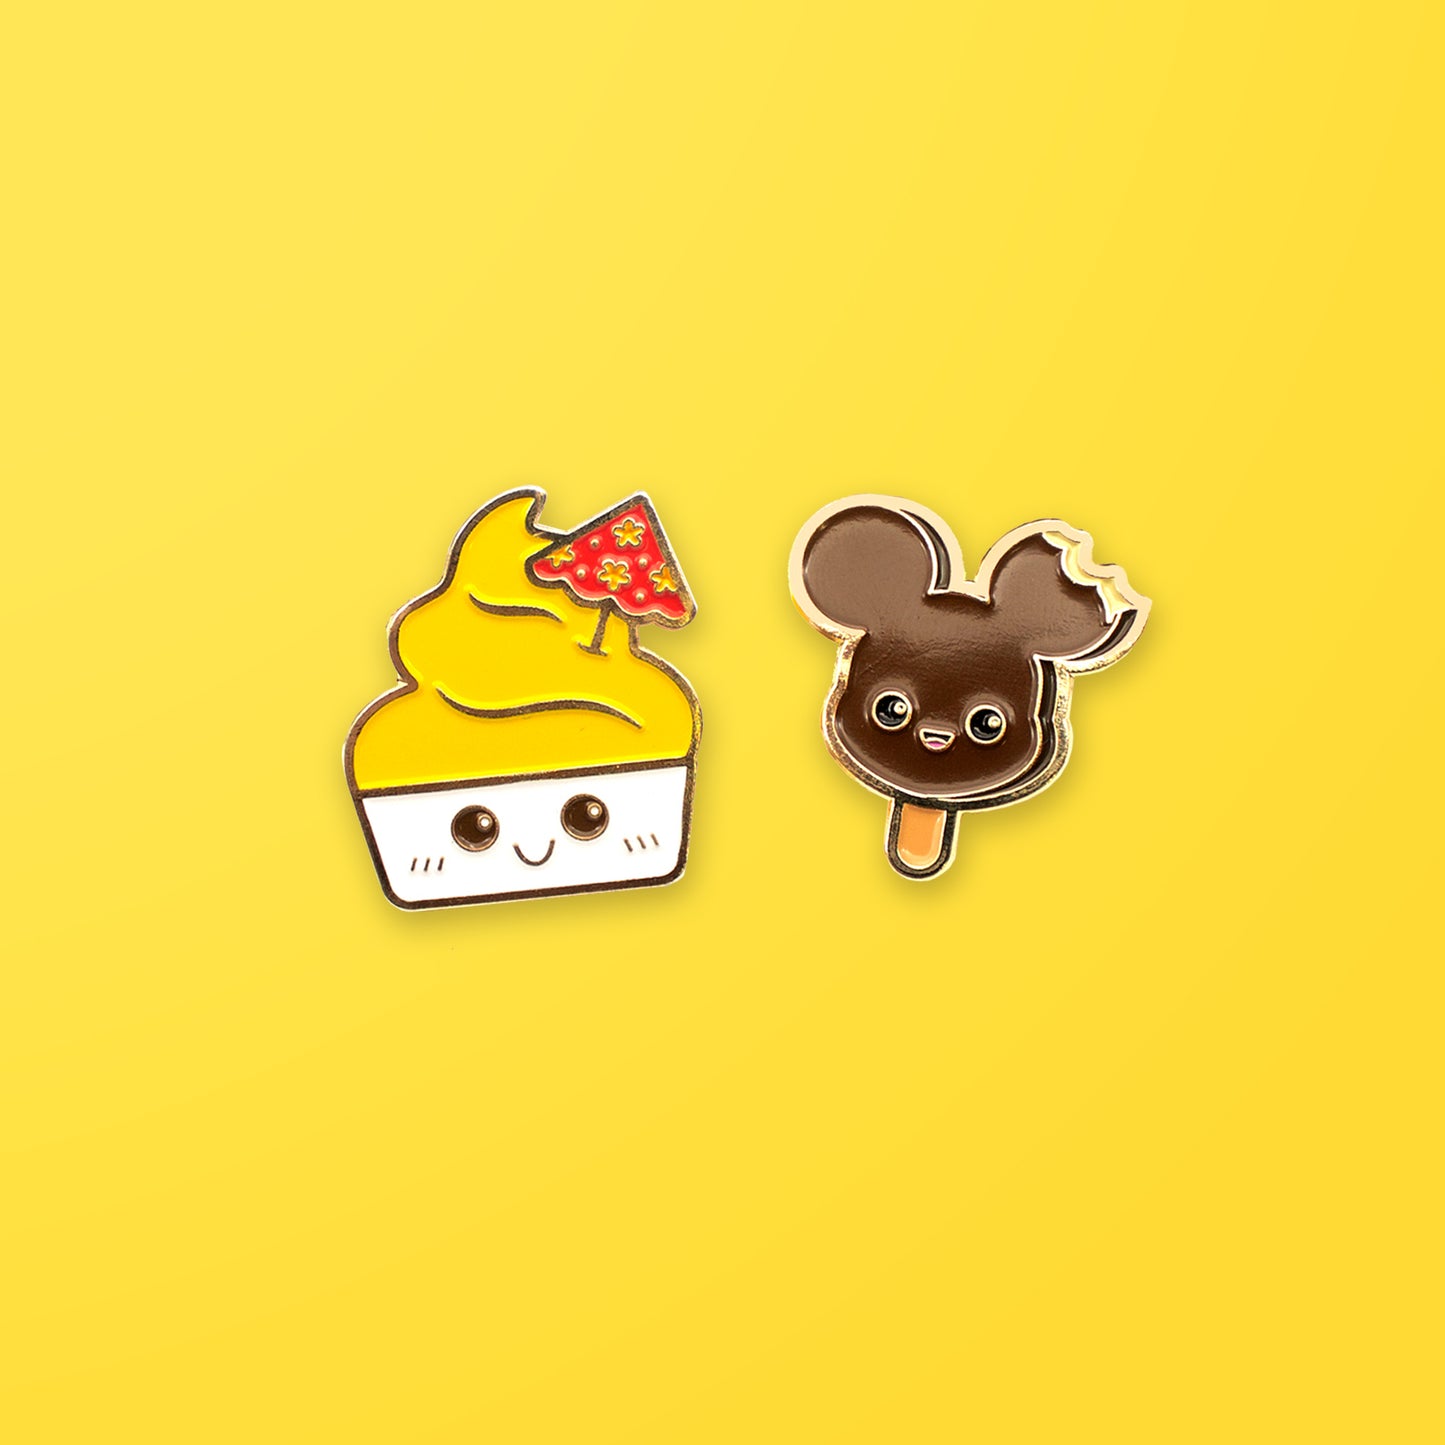 Disney Dole Whip and Mickey Ice Cream enamel pin set on yellow background